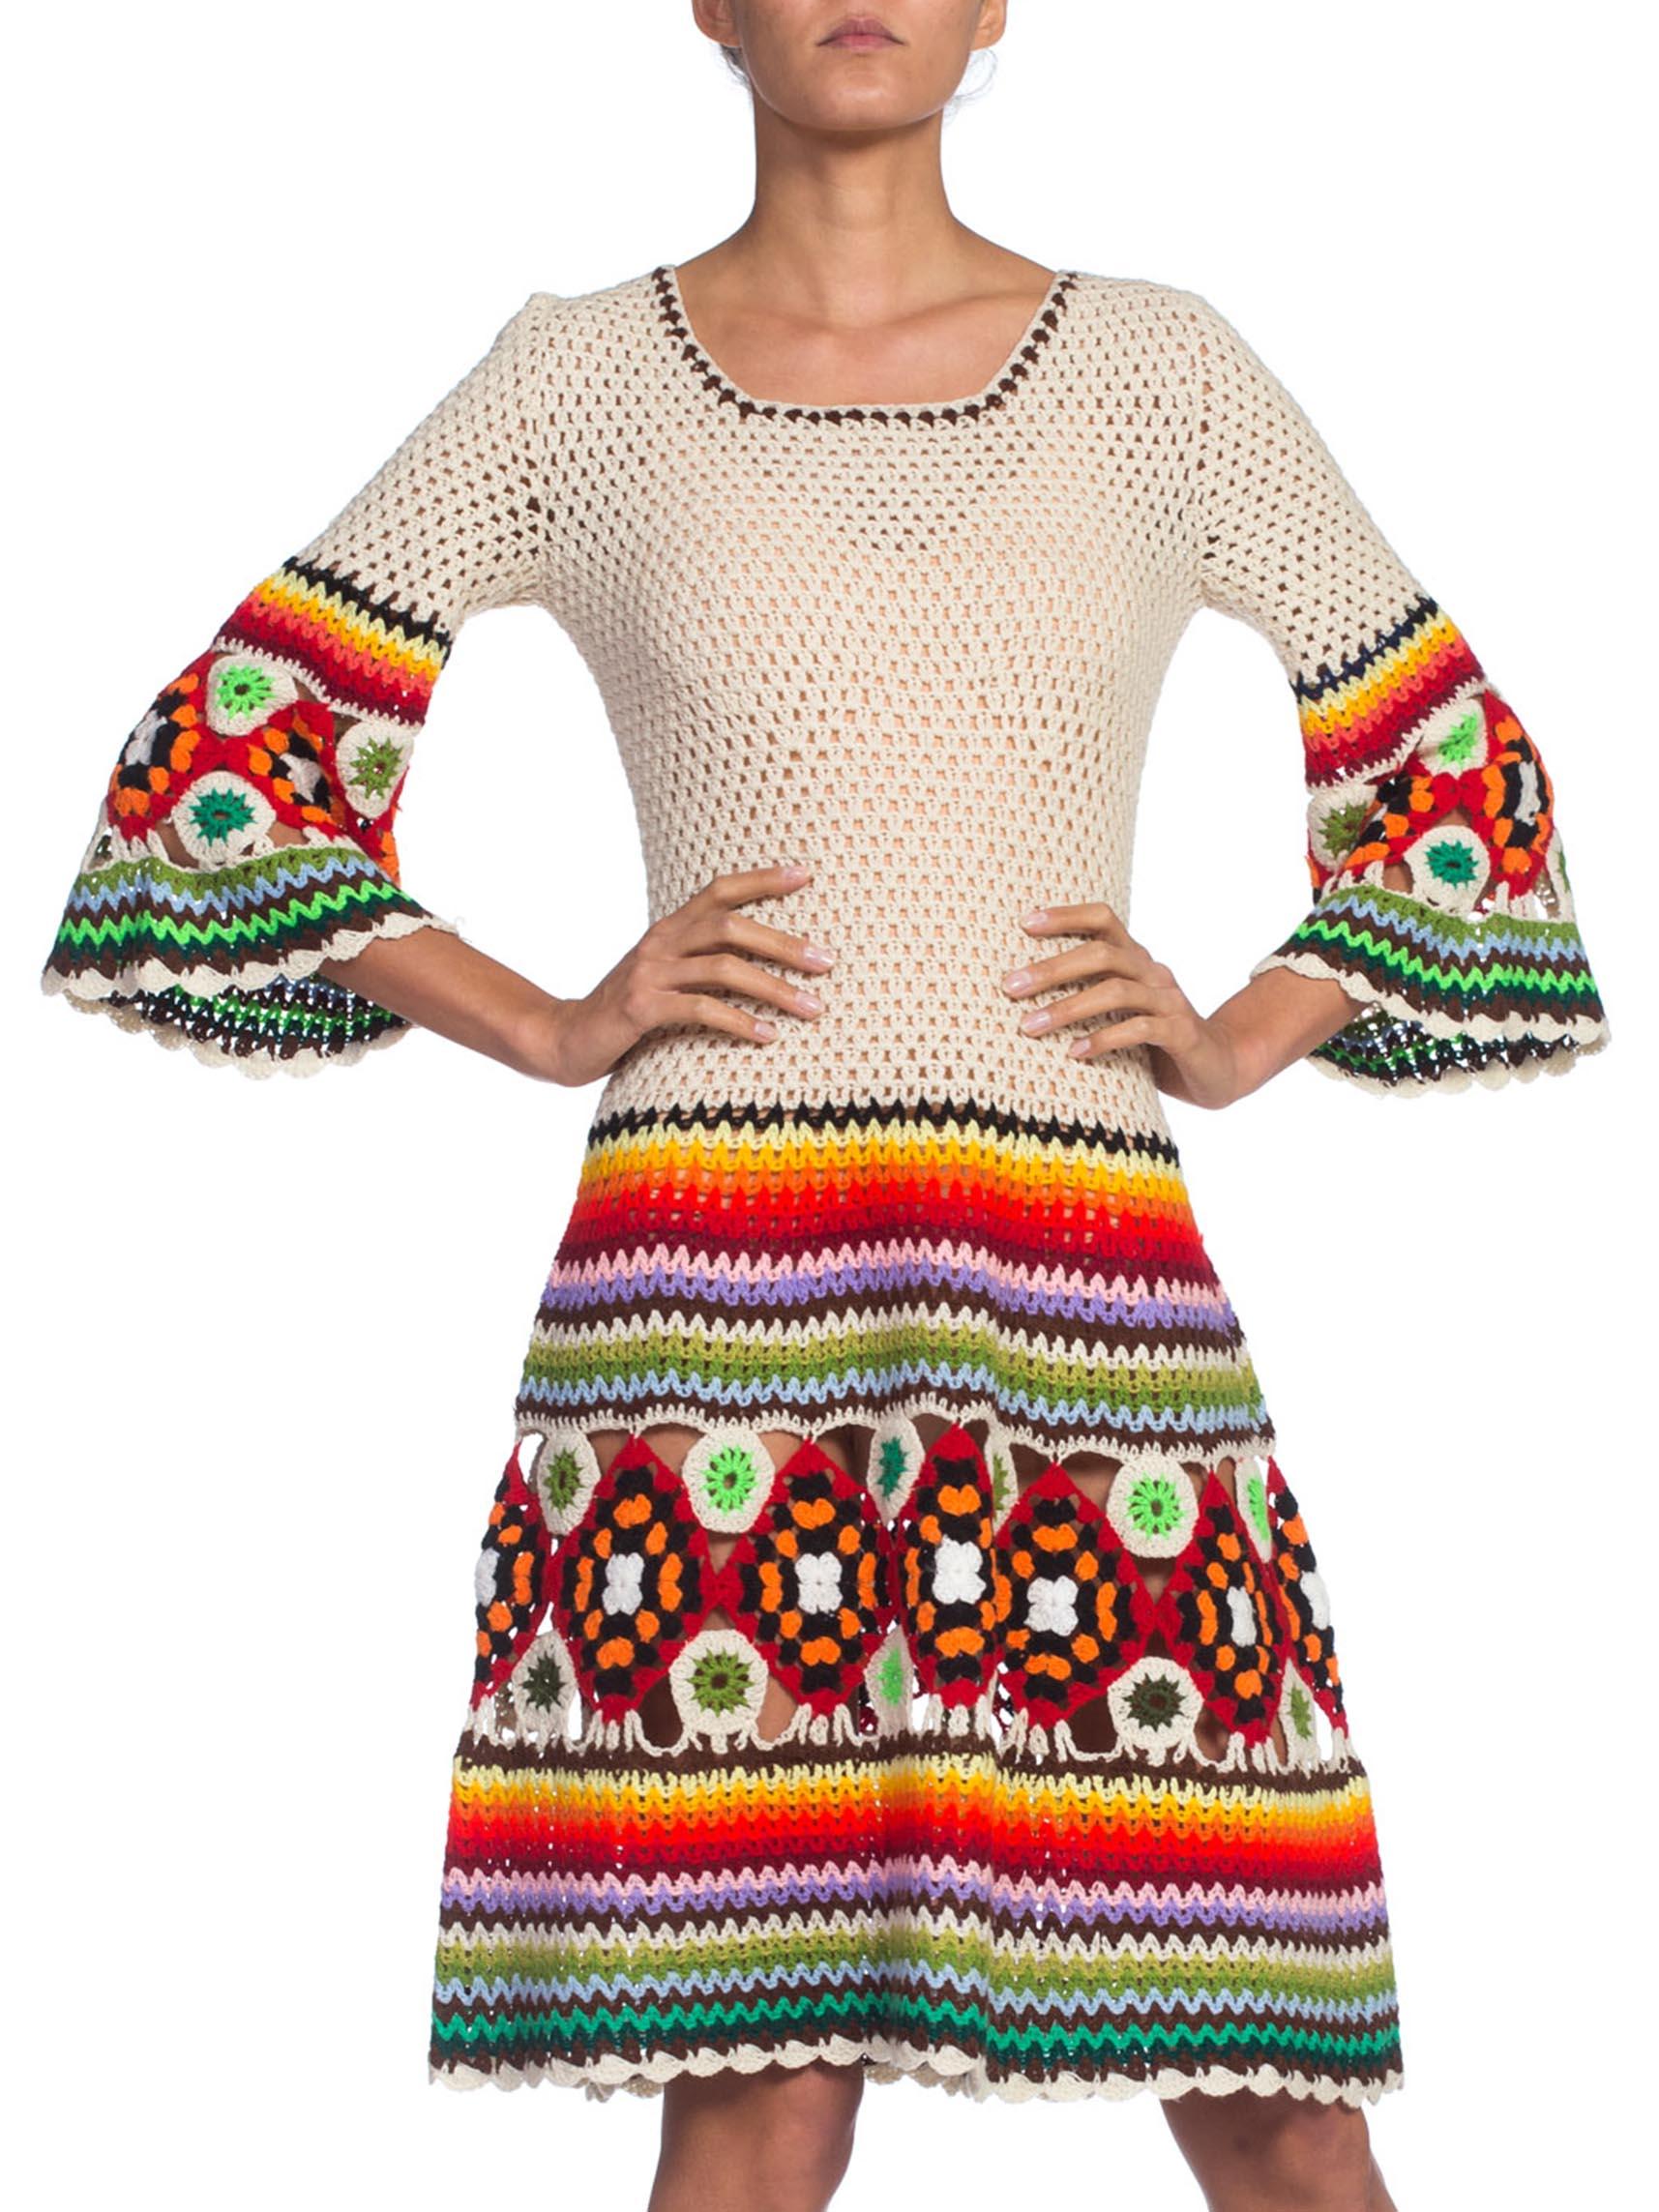 rainbow crochet dress